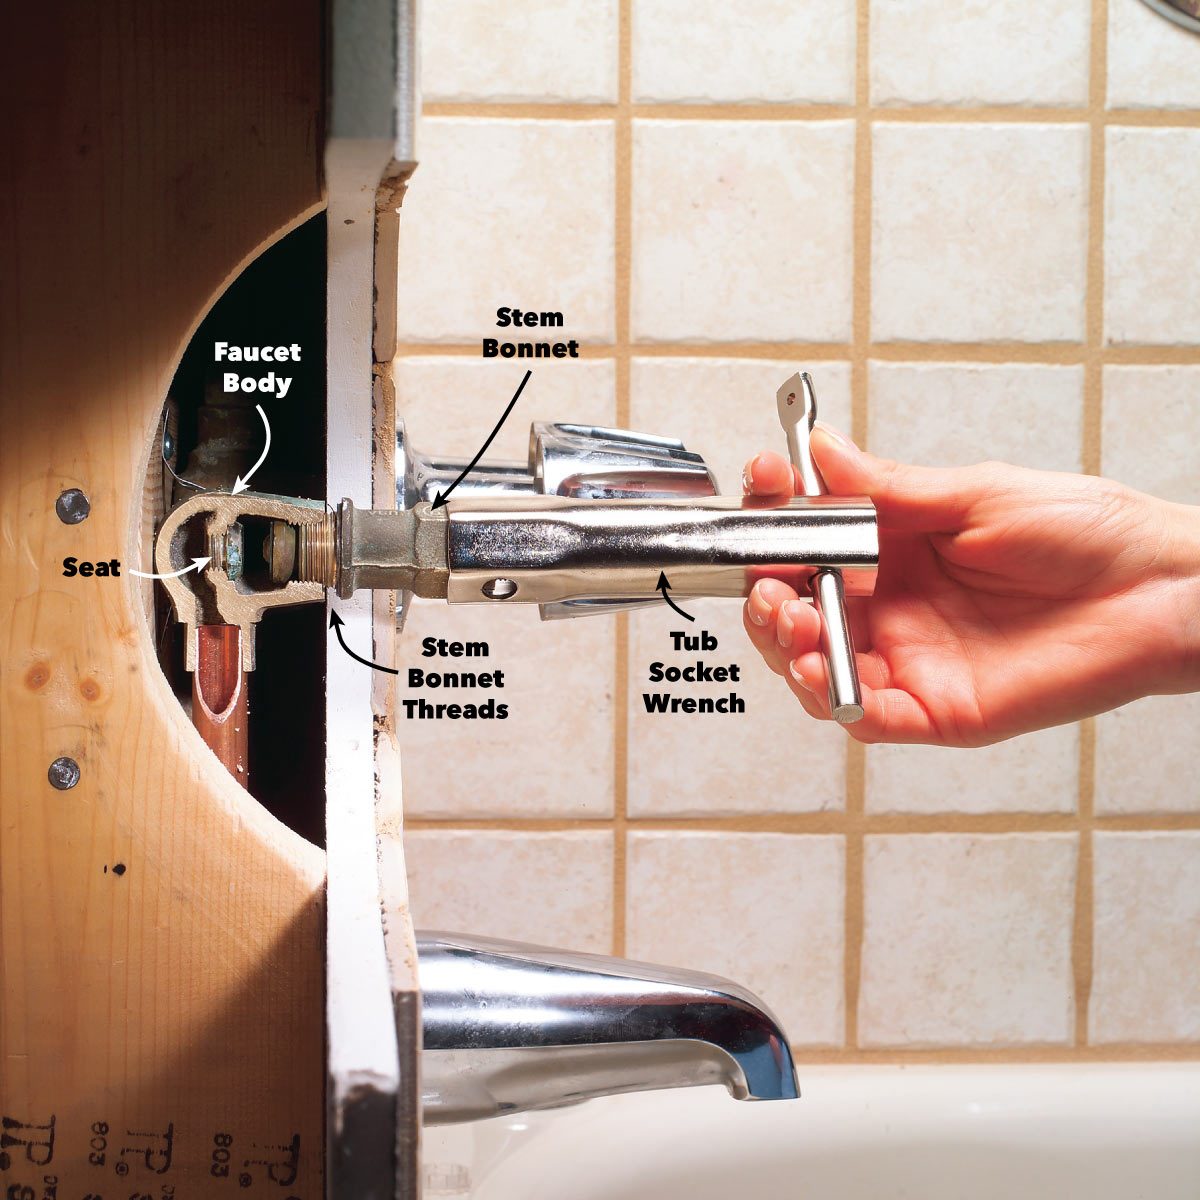 How To Fix A Leaking Bathtub Faucet Diy Family Handyman